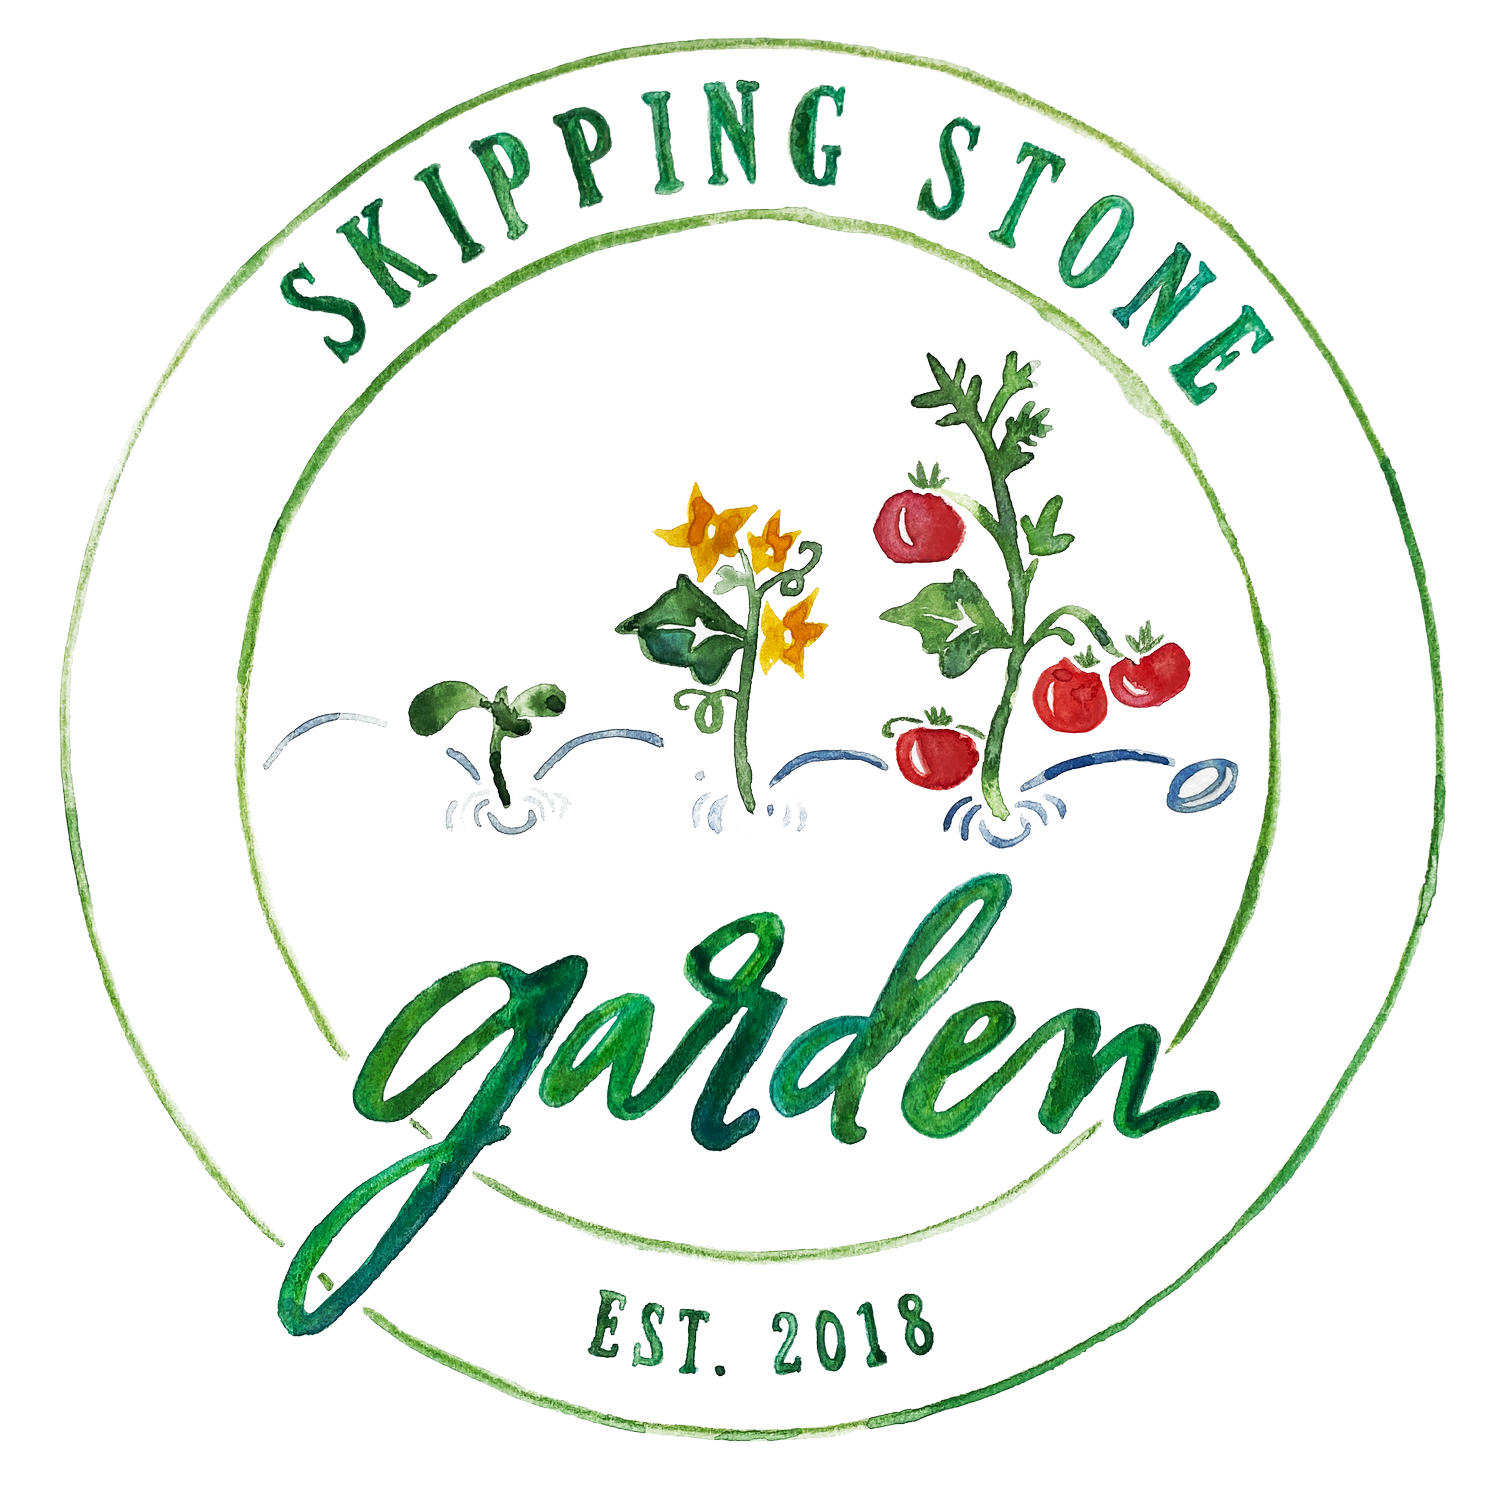 Skipping Stone Garden - Organic Vegetable Market Garden in Olympia, Washington